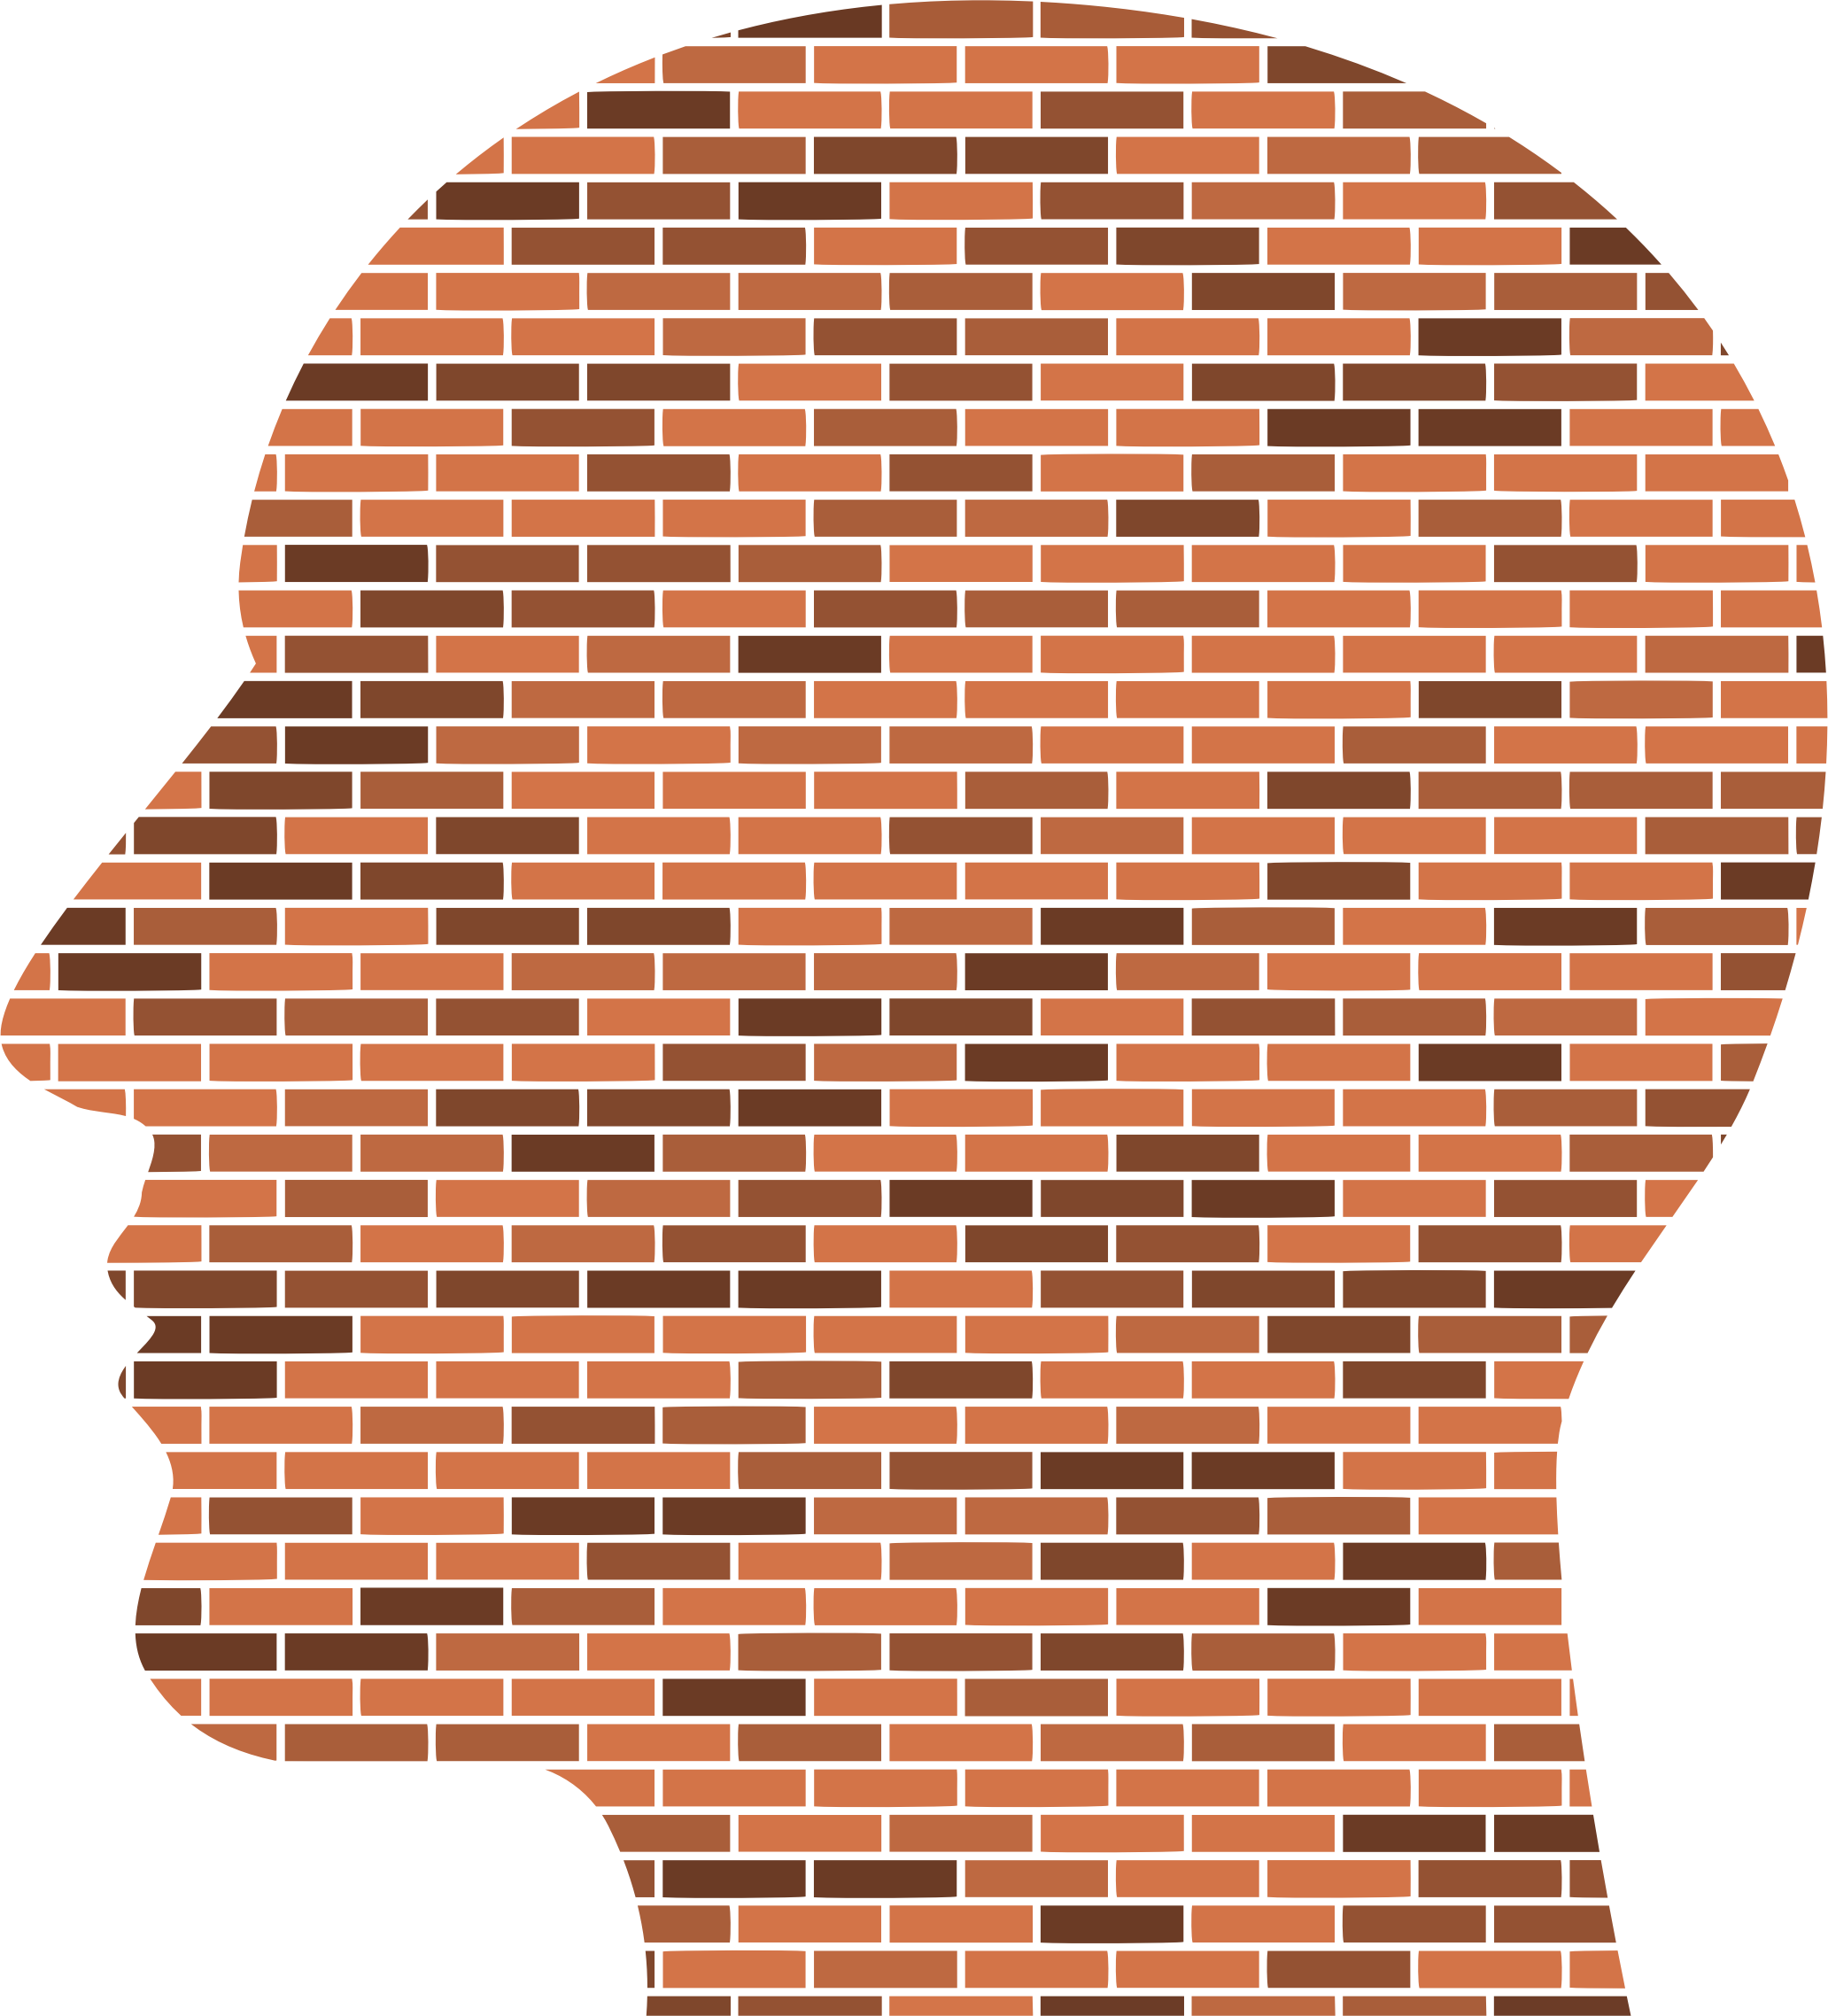 A Profile Of A Man's Head